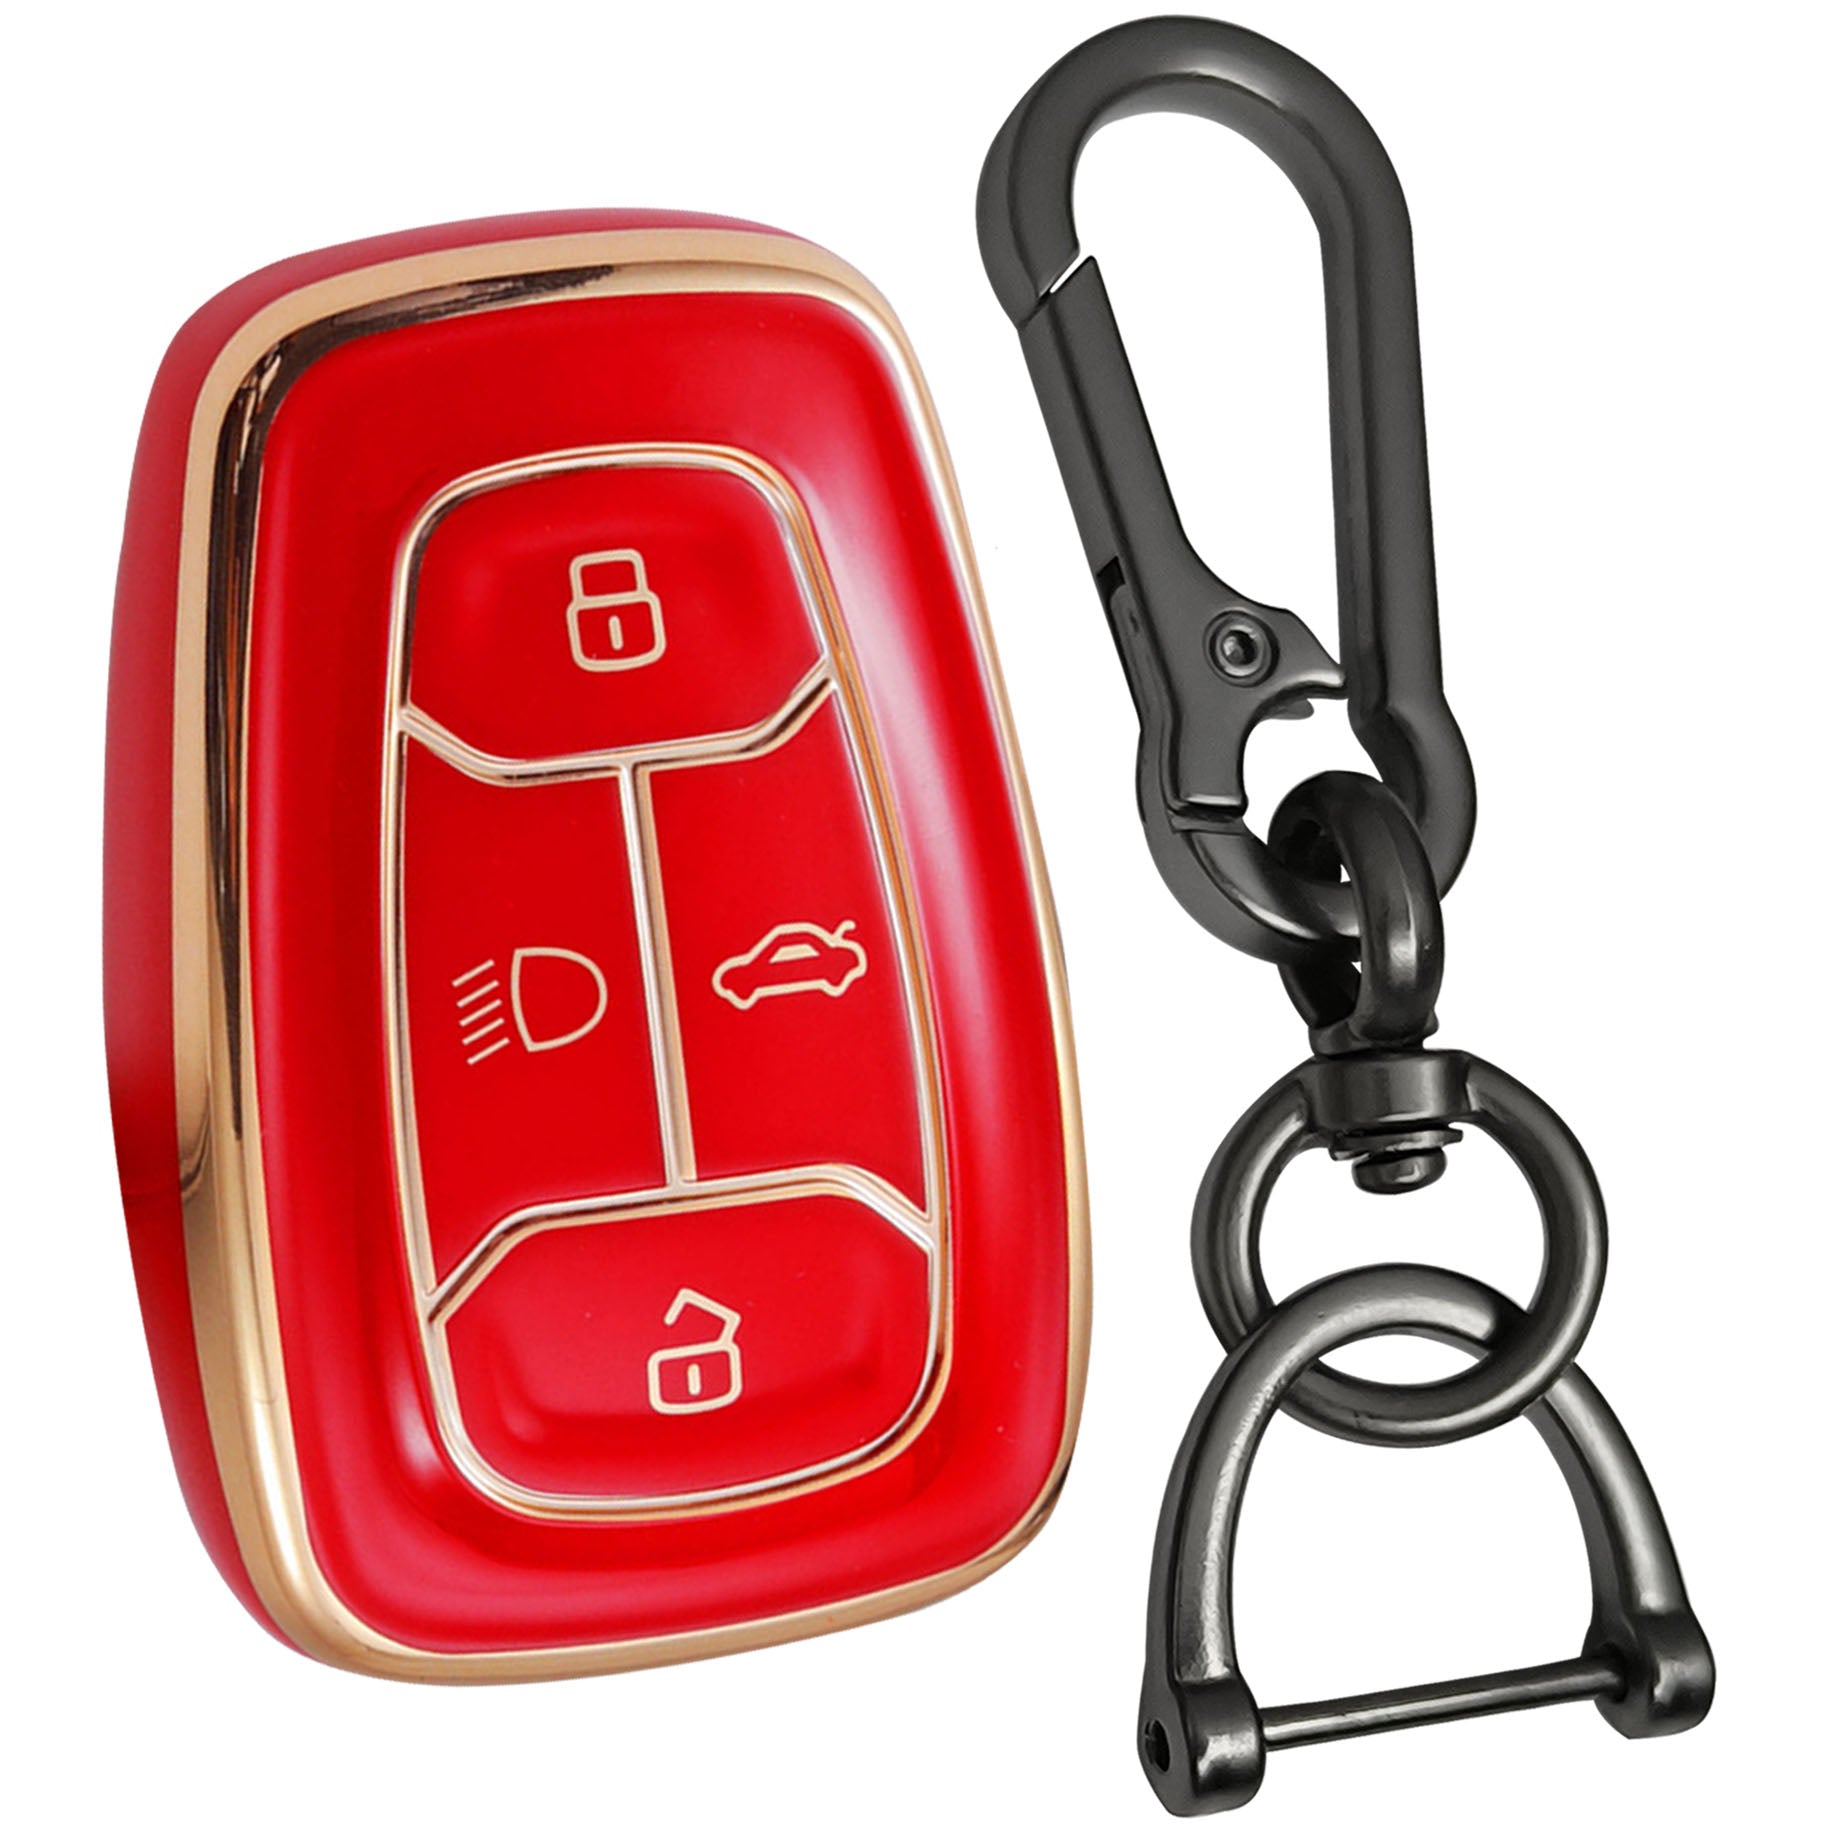 tata nexon harrier safari punch altroz tpu cover red gold car key cover case keychain